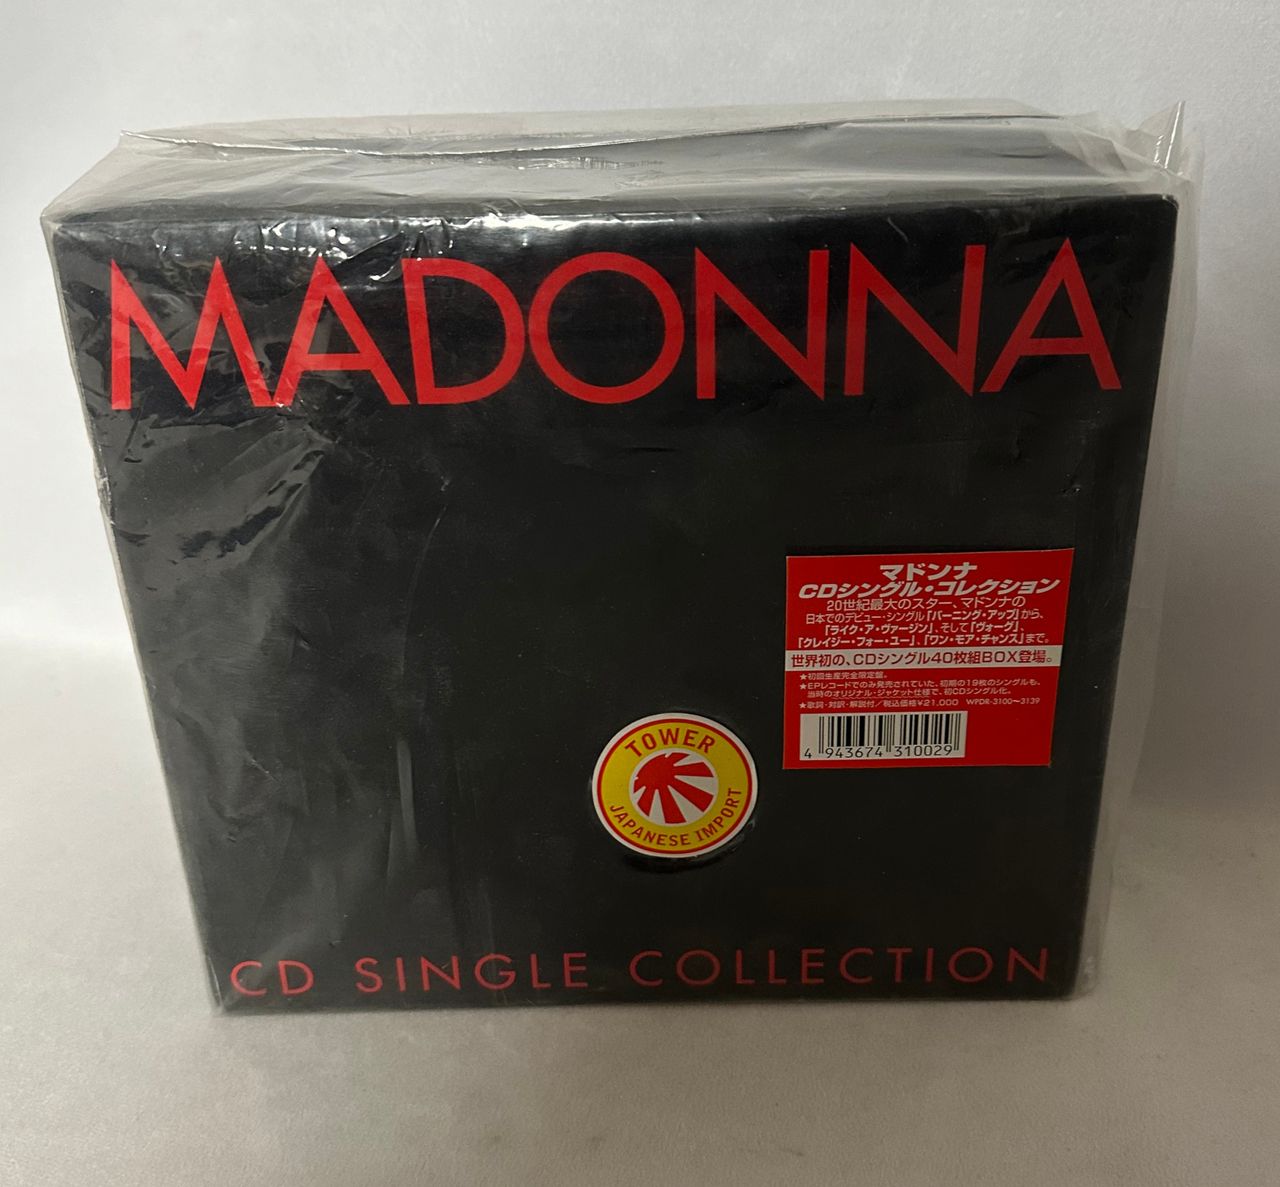 Madonna CD Single Collection Japanese Cd single boxset — RareVinyl.com